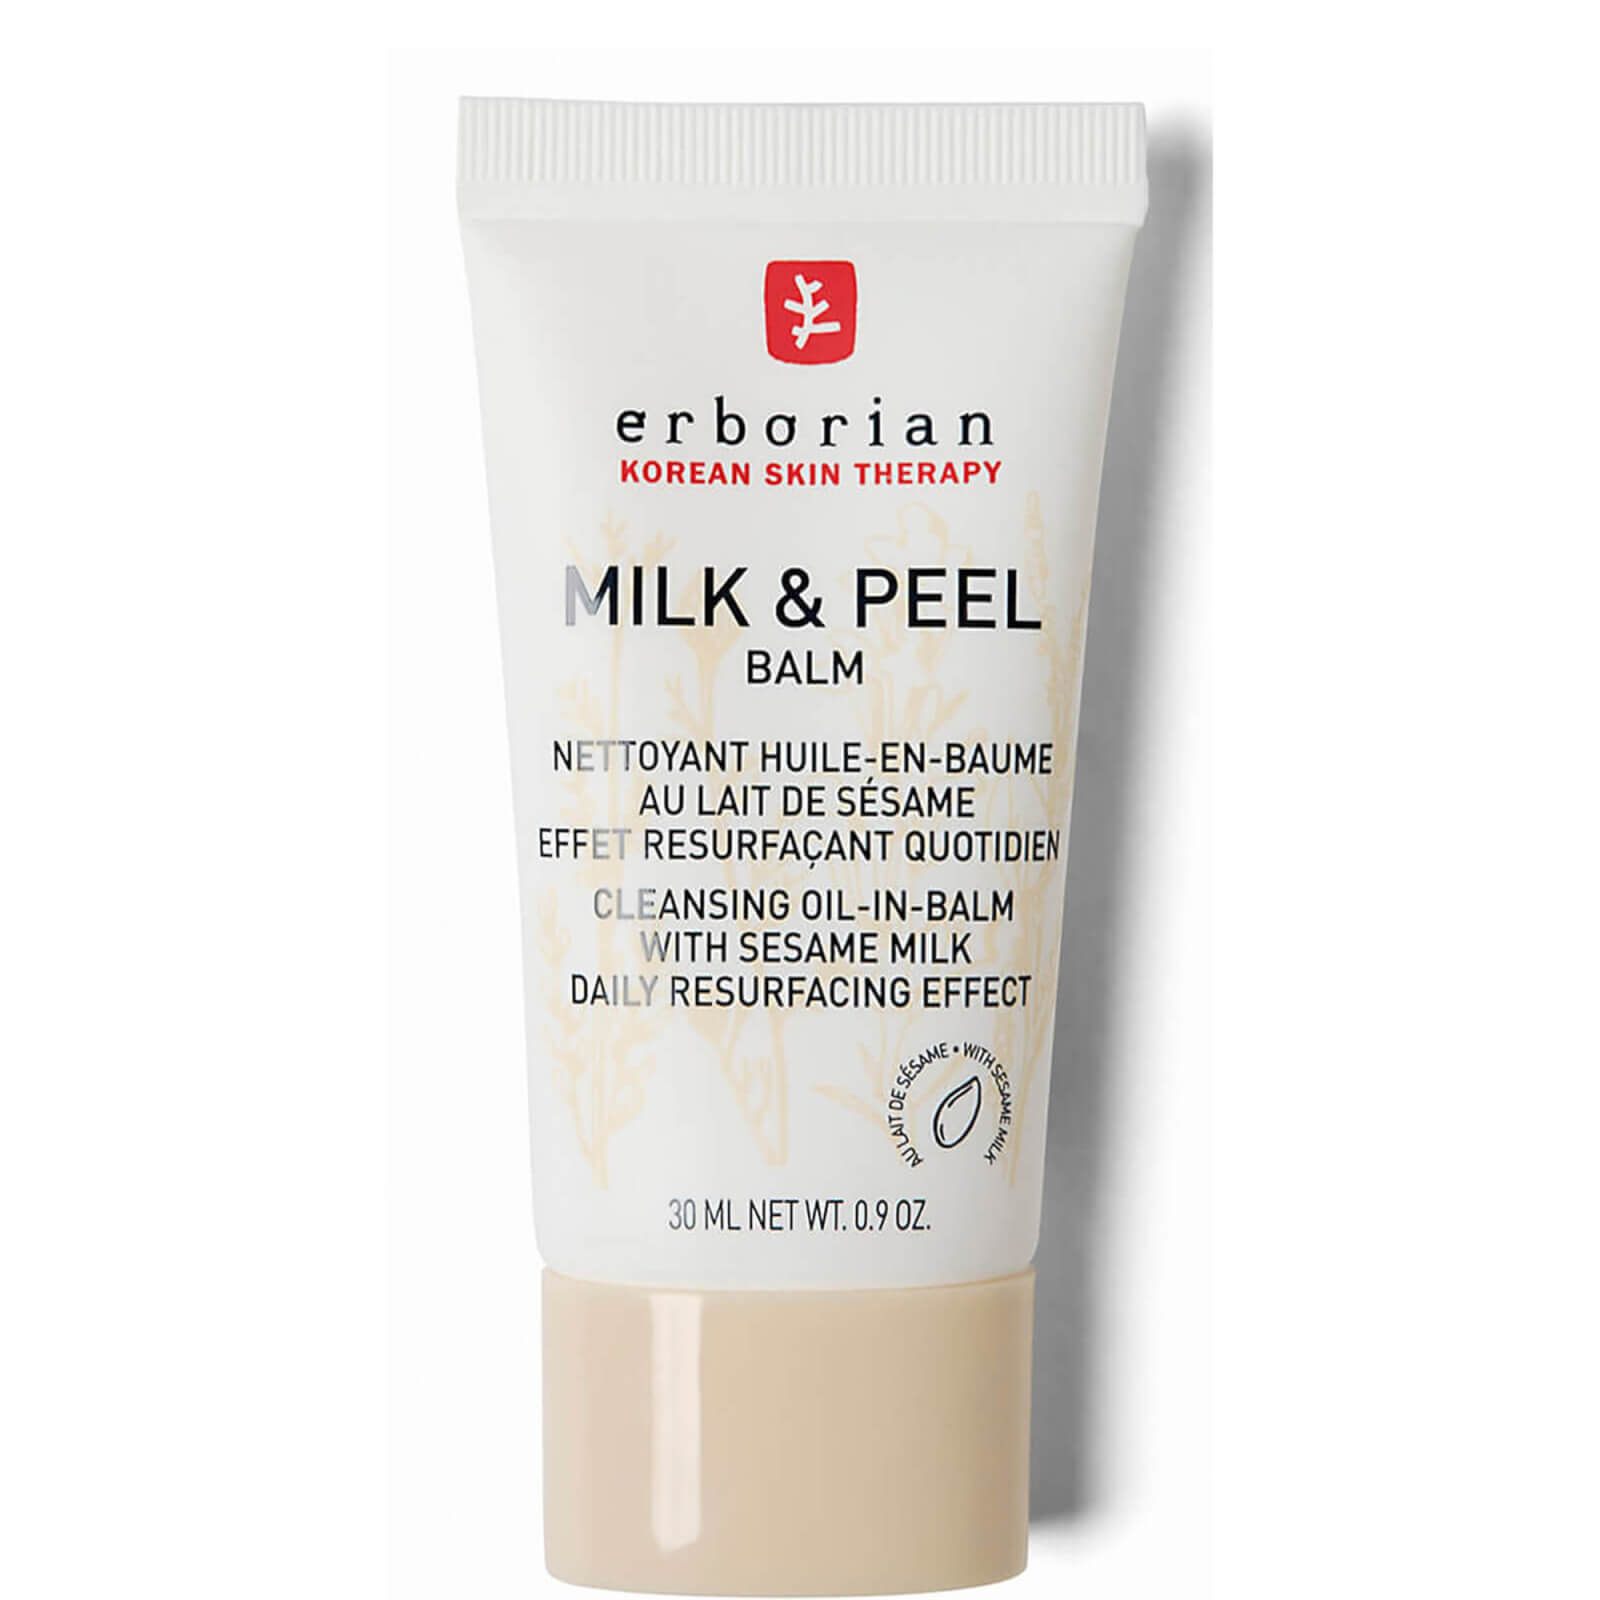 Photos - Facial / Body Cleansing Product Erborian Milk and Peel Resurfacing Balm 30ml 6AA10299 